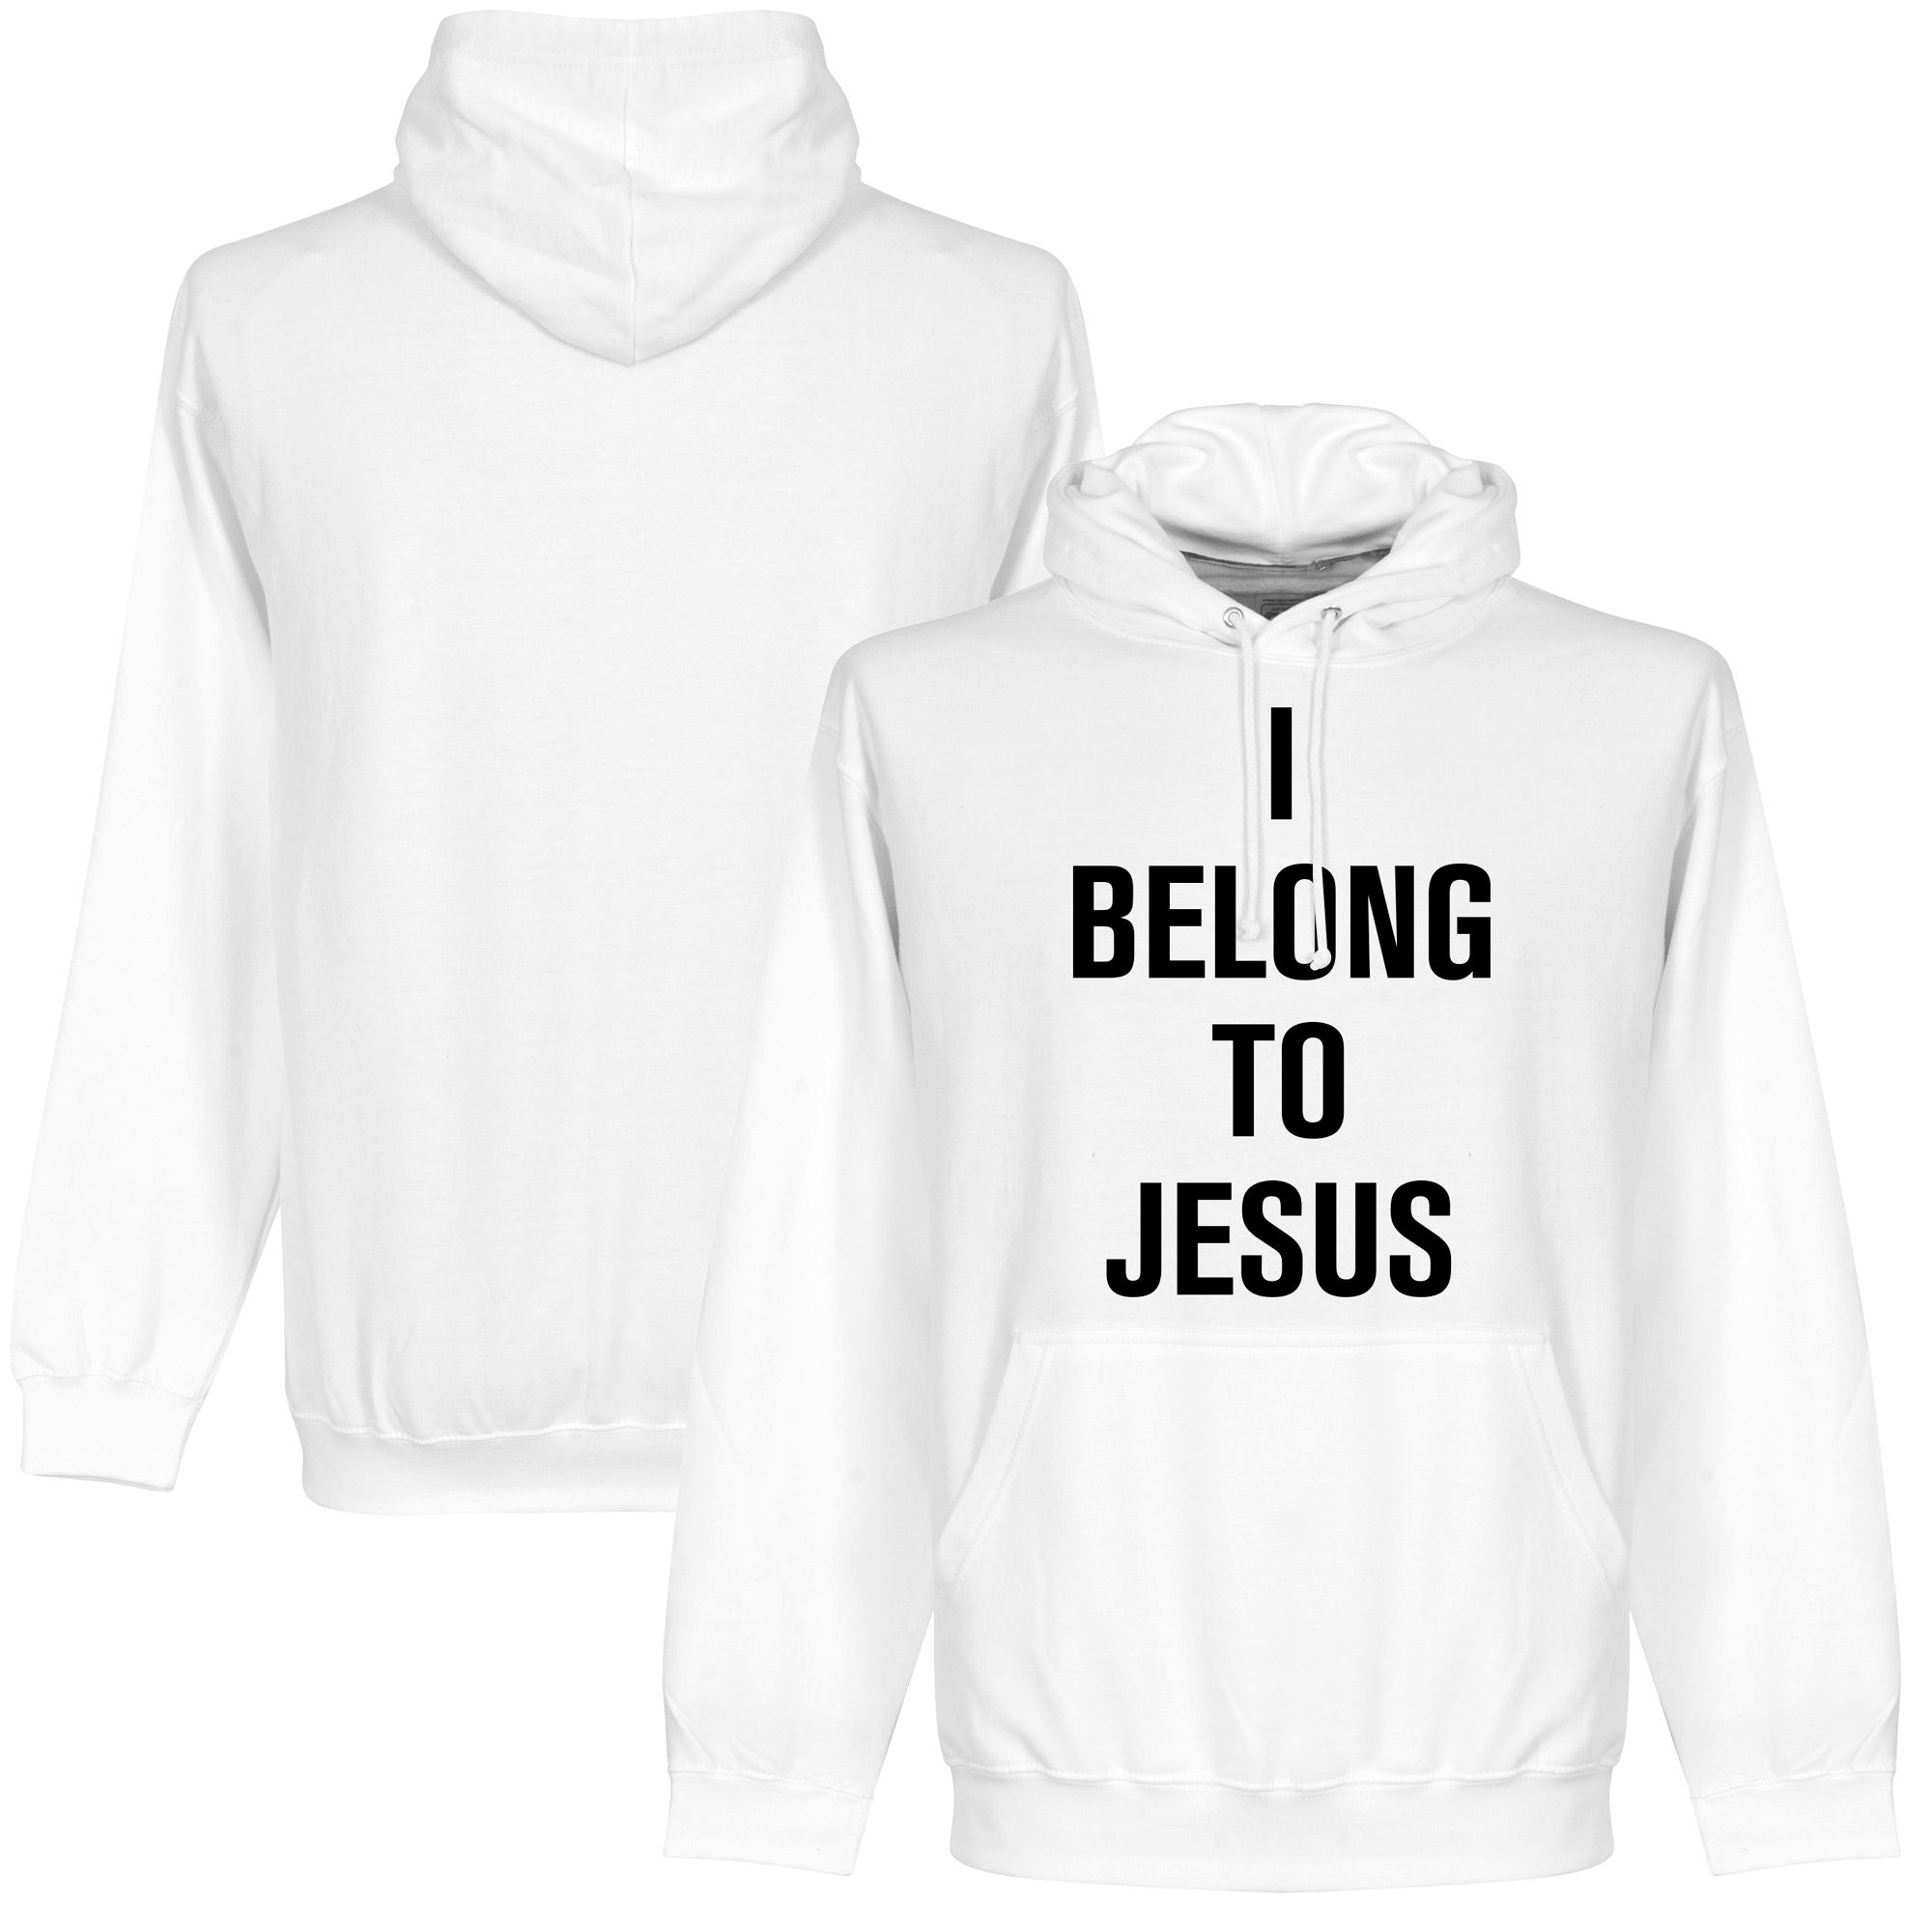 I Belong to Jesus Hooded Sweater